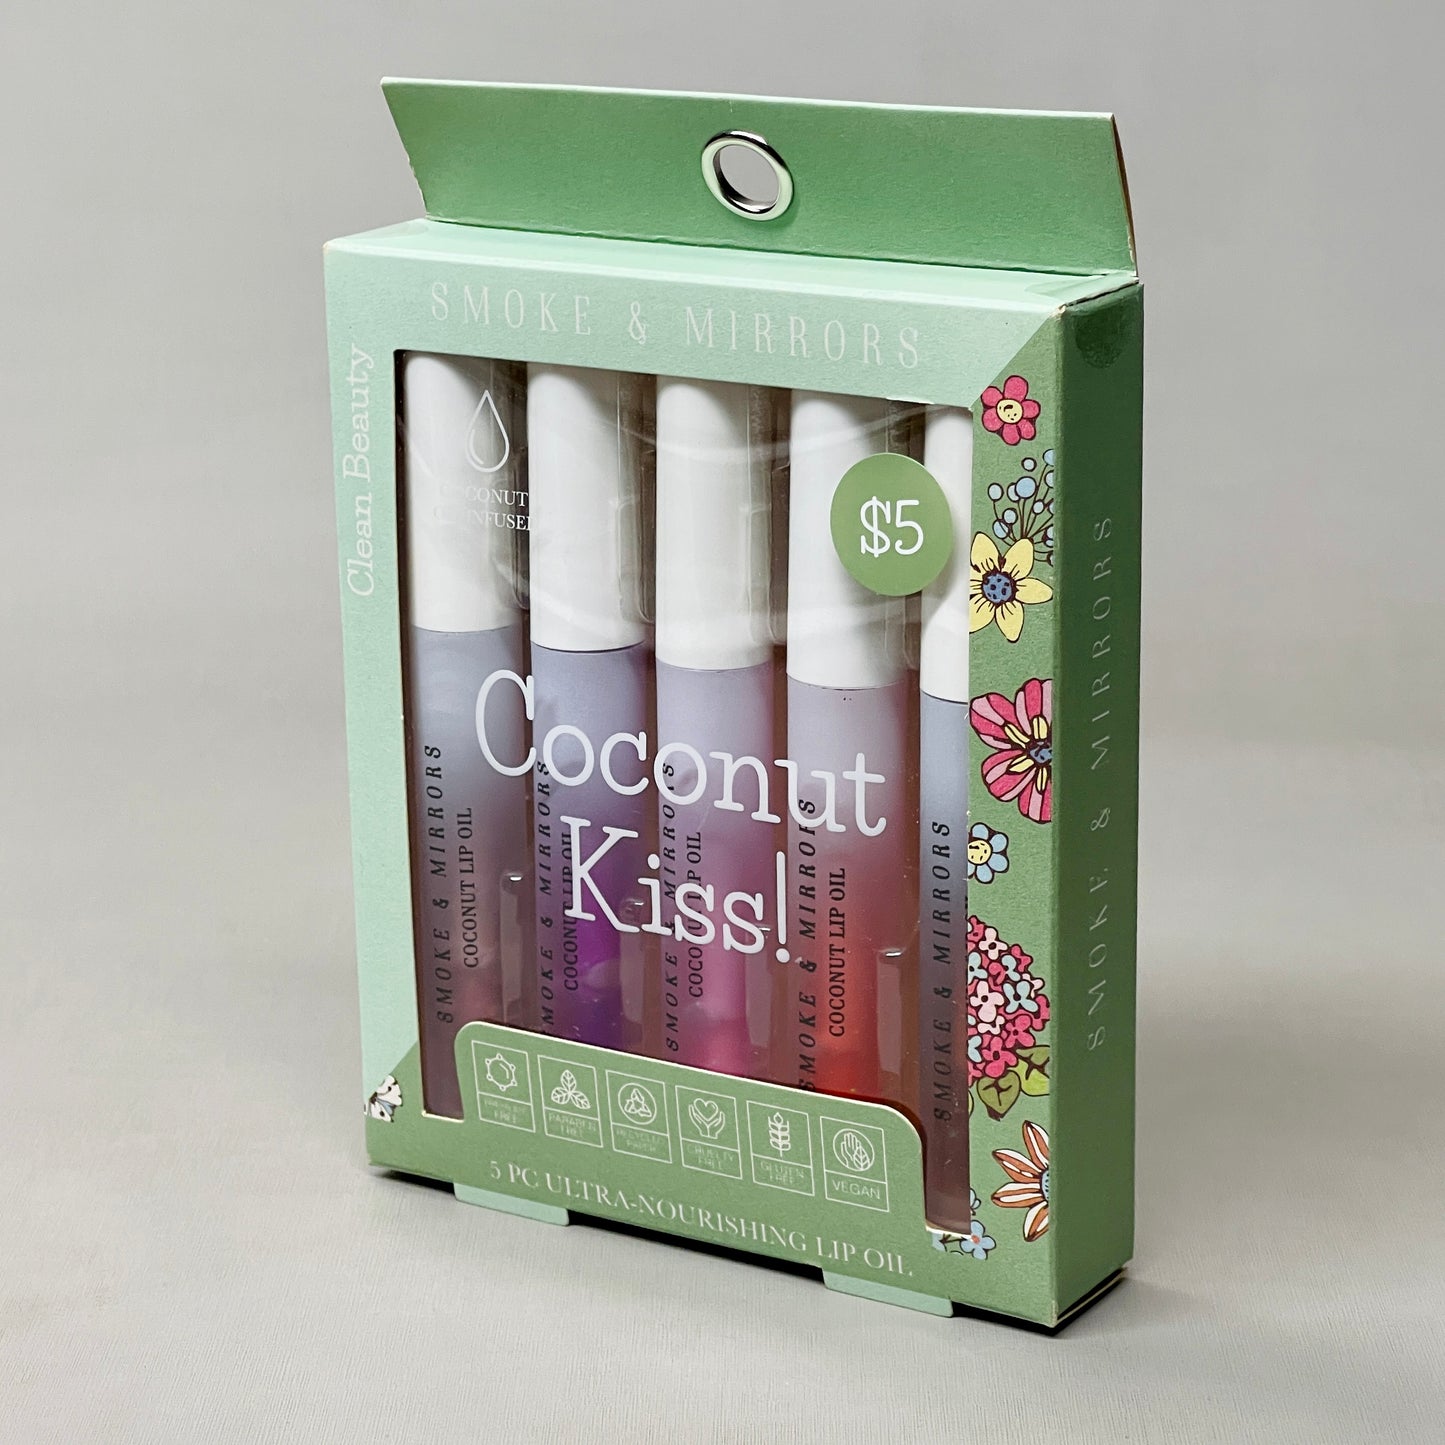 SMOKE & MIRRORS 3 Pack Of Coconut Kiss 5 PC Ultra-Nourishing Lip Oil 02/24 (New)